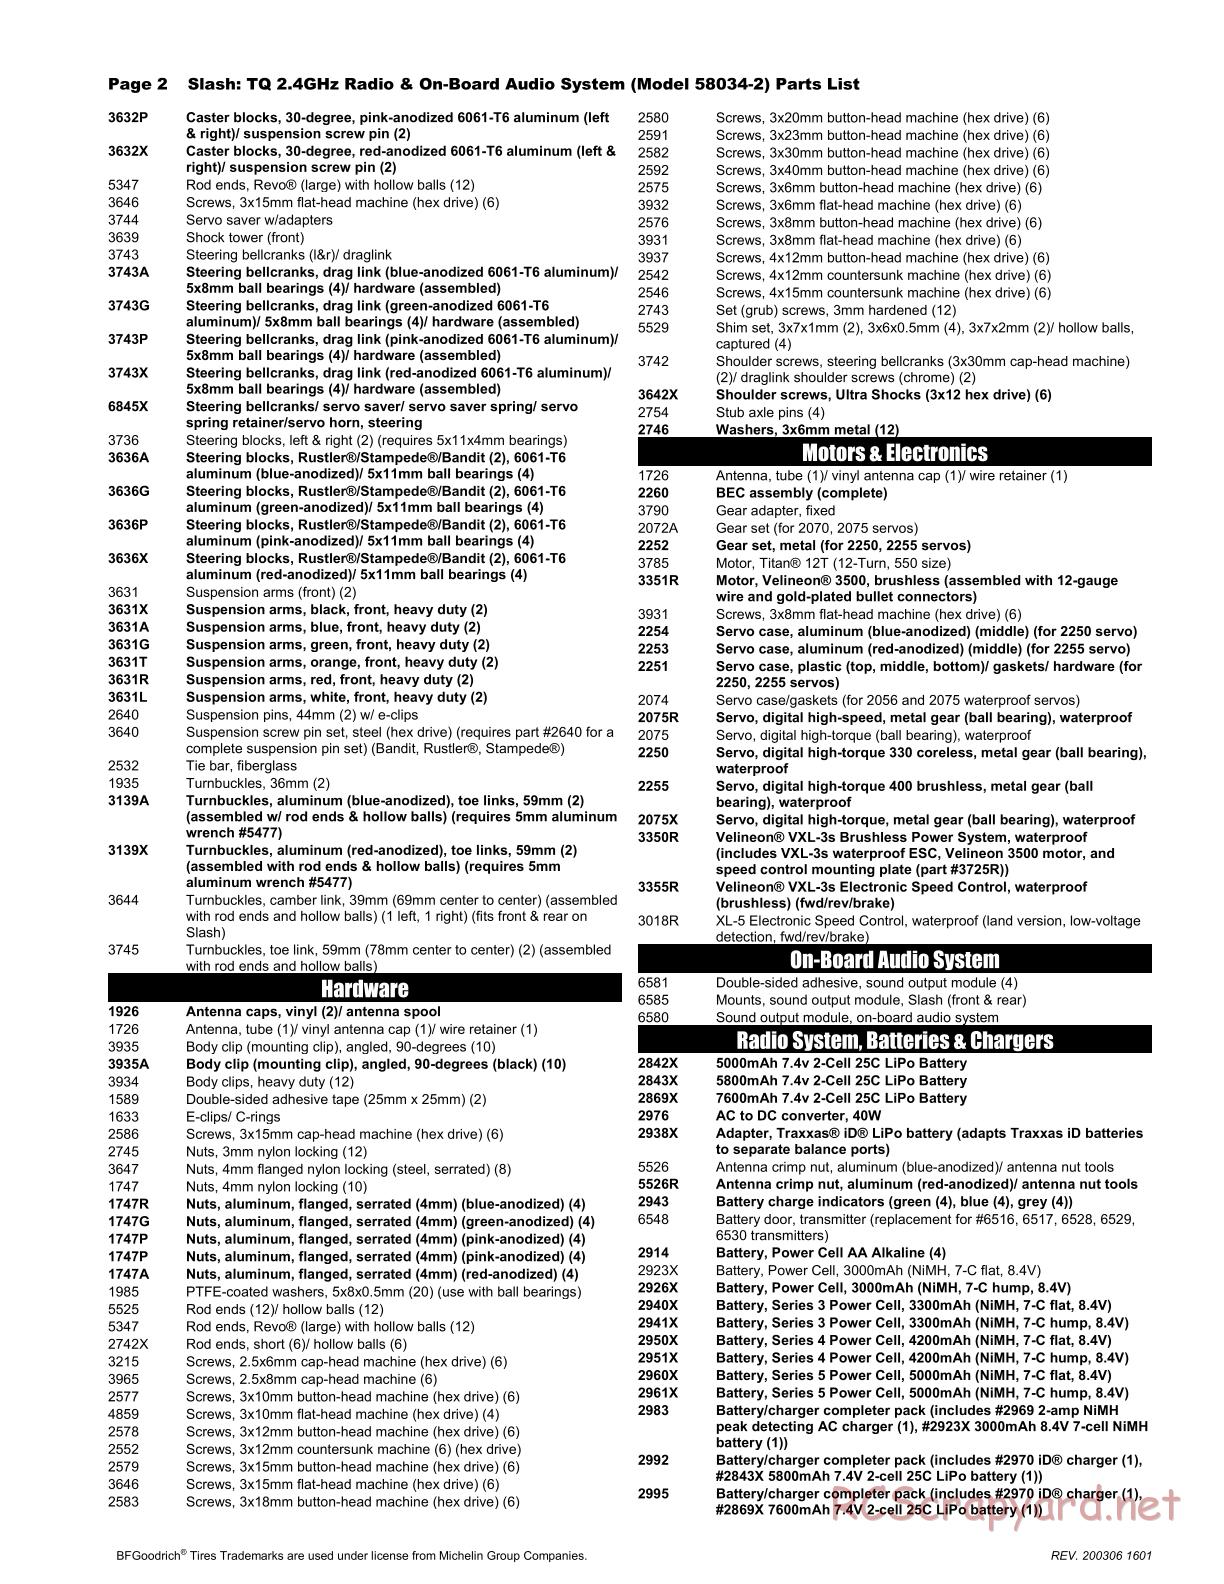 Traxxas - Slash OBA 2WD - Parts List - Page 2